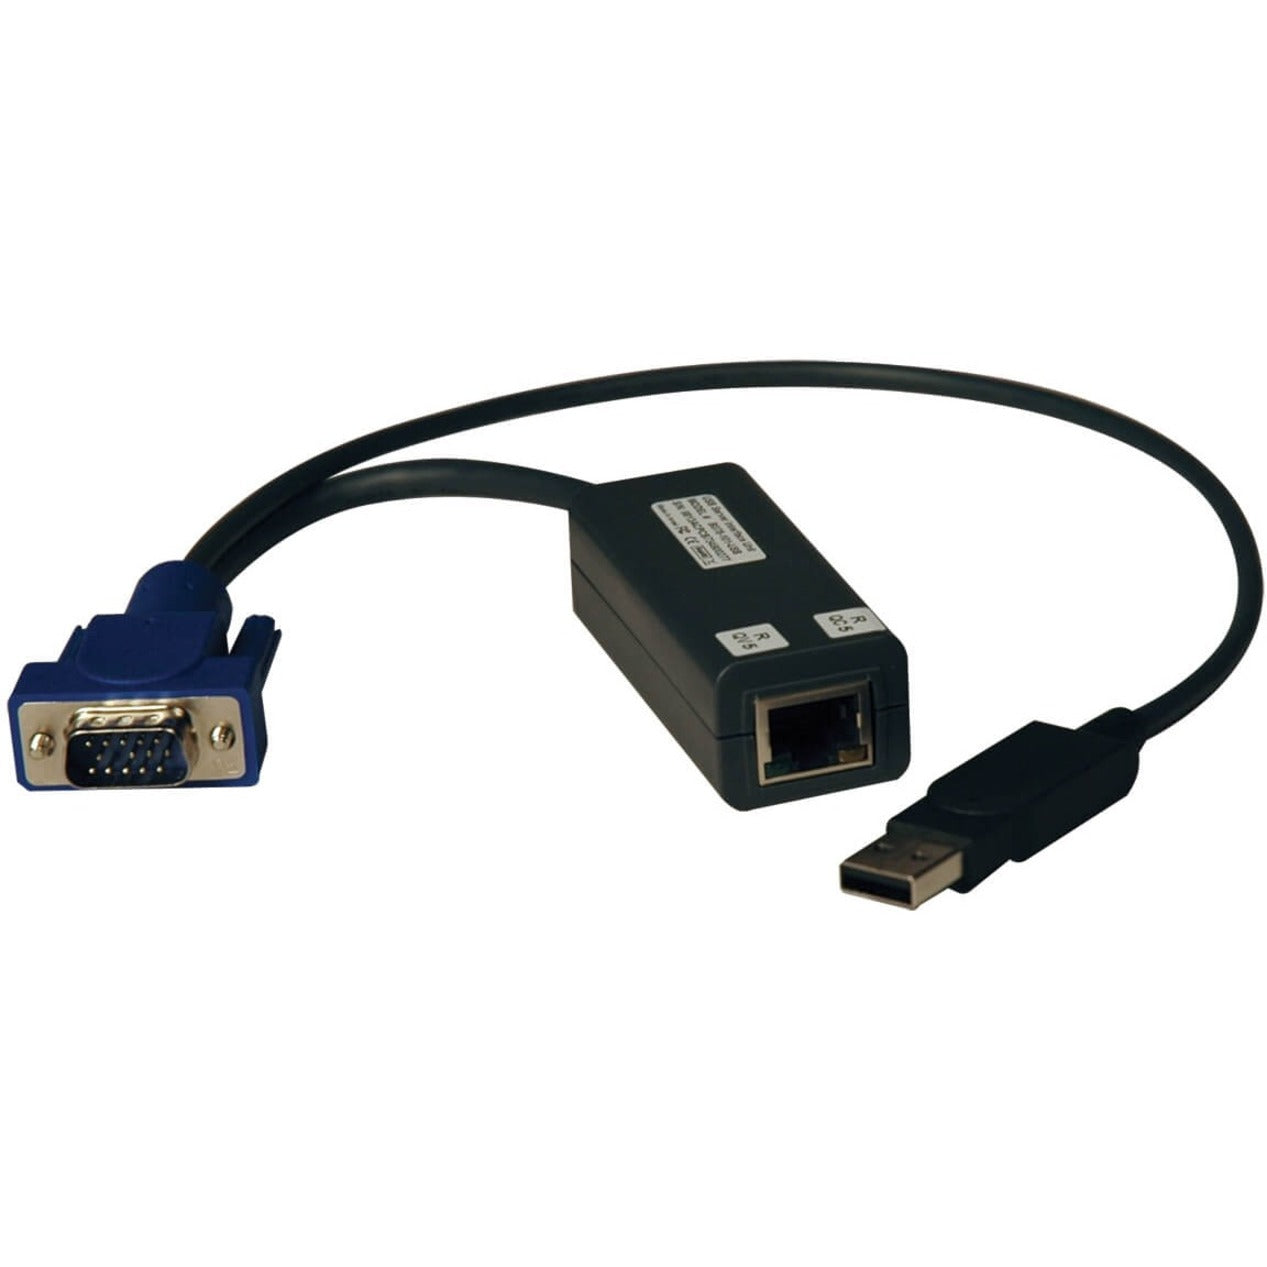 Tripp Lite B078-101-USB-1 NetCommander USB服务器接口单元（SIU）KVM电缆，RJ-45/USB/VGA，黑色。品牌名称：Tripp Lite。将此信息翻译成中文（普通话）。品牌名称不变。